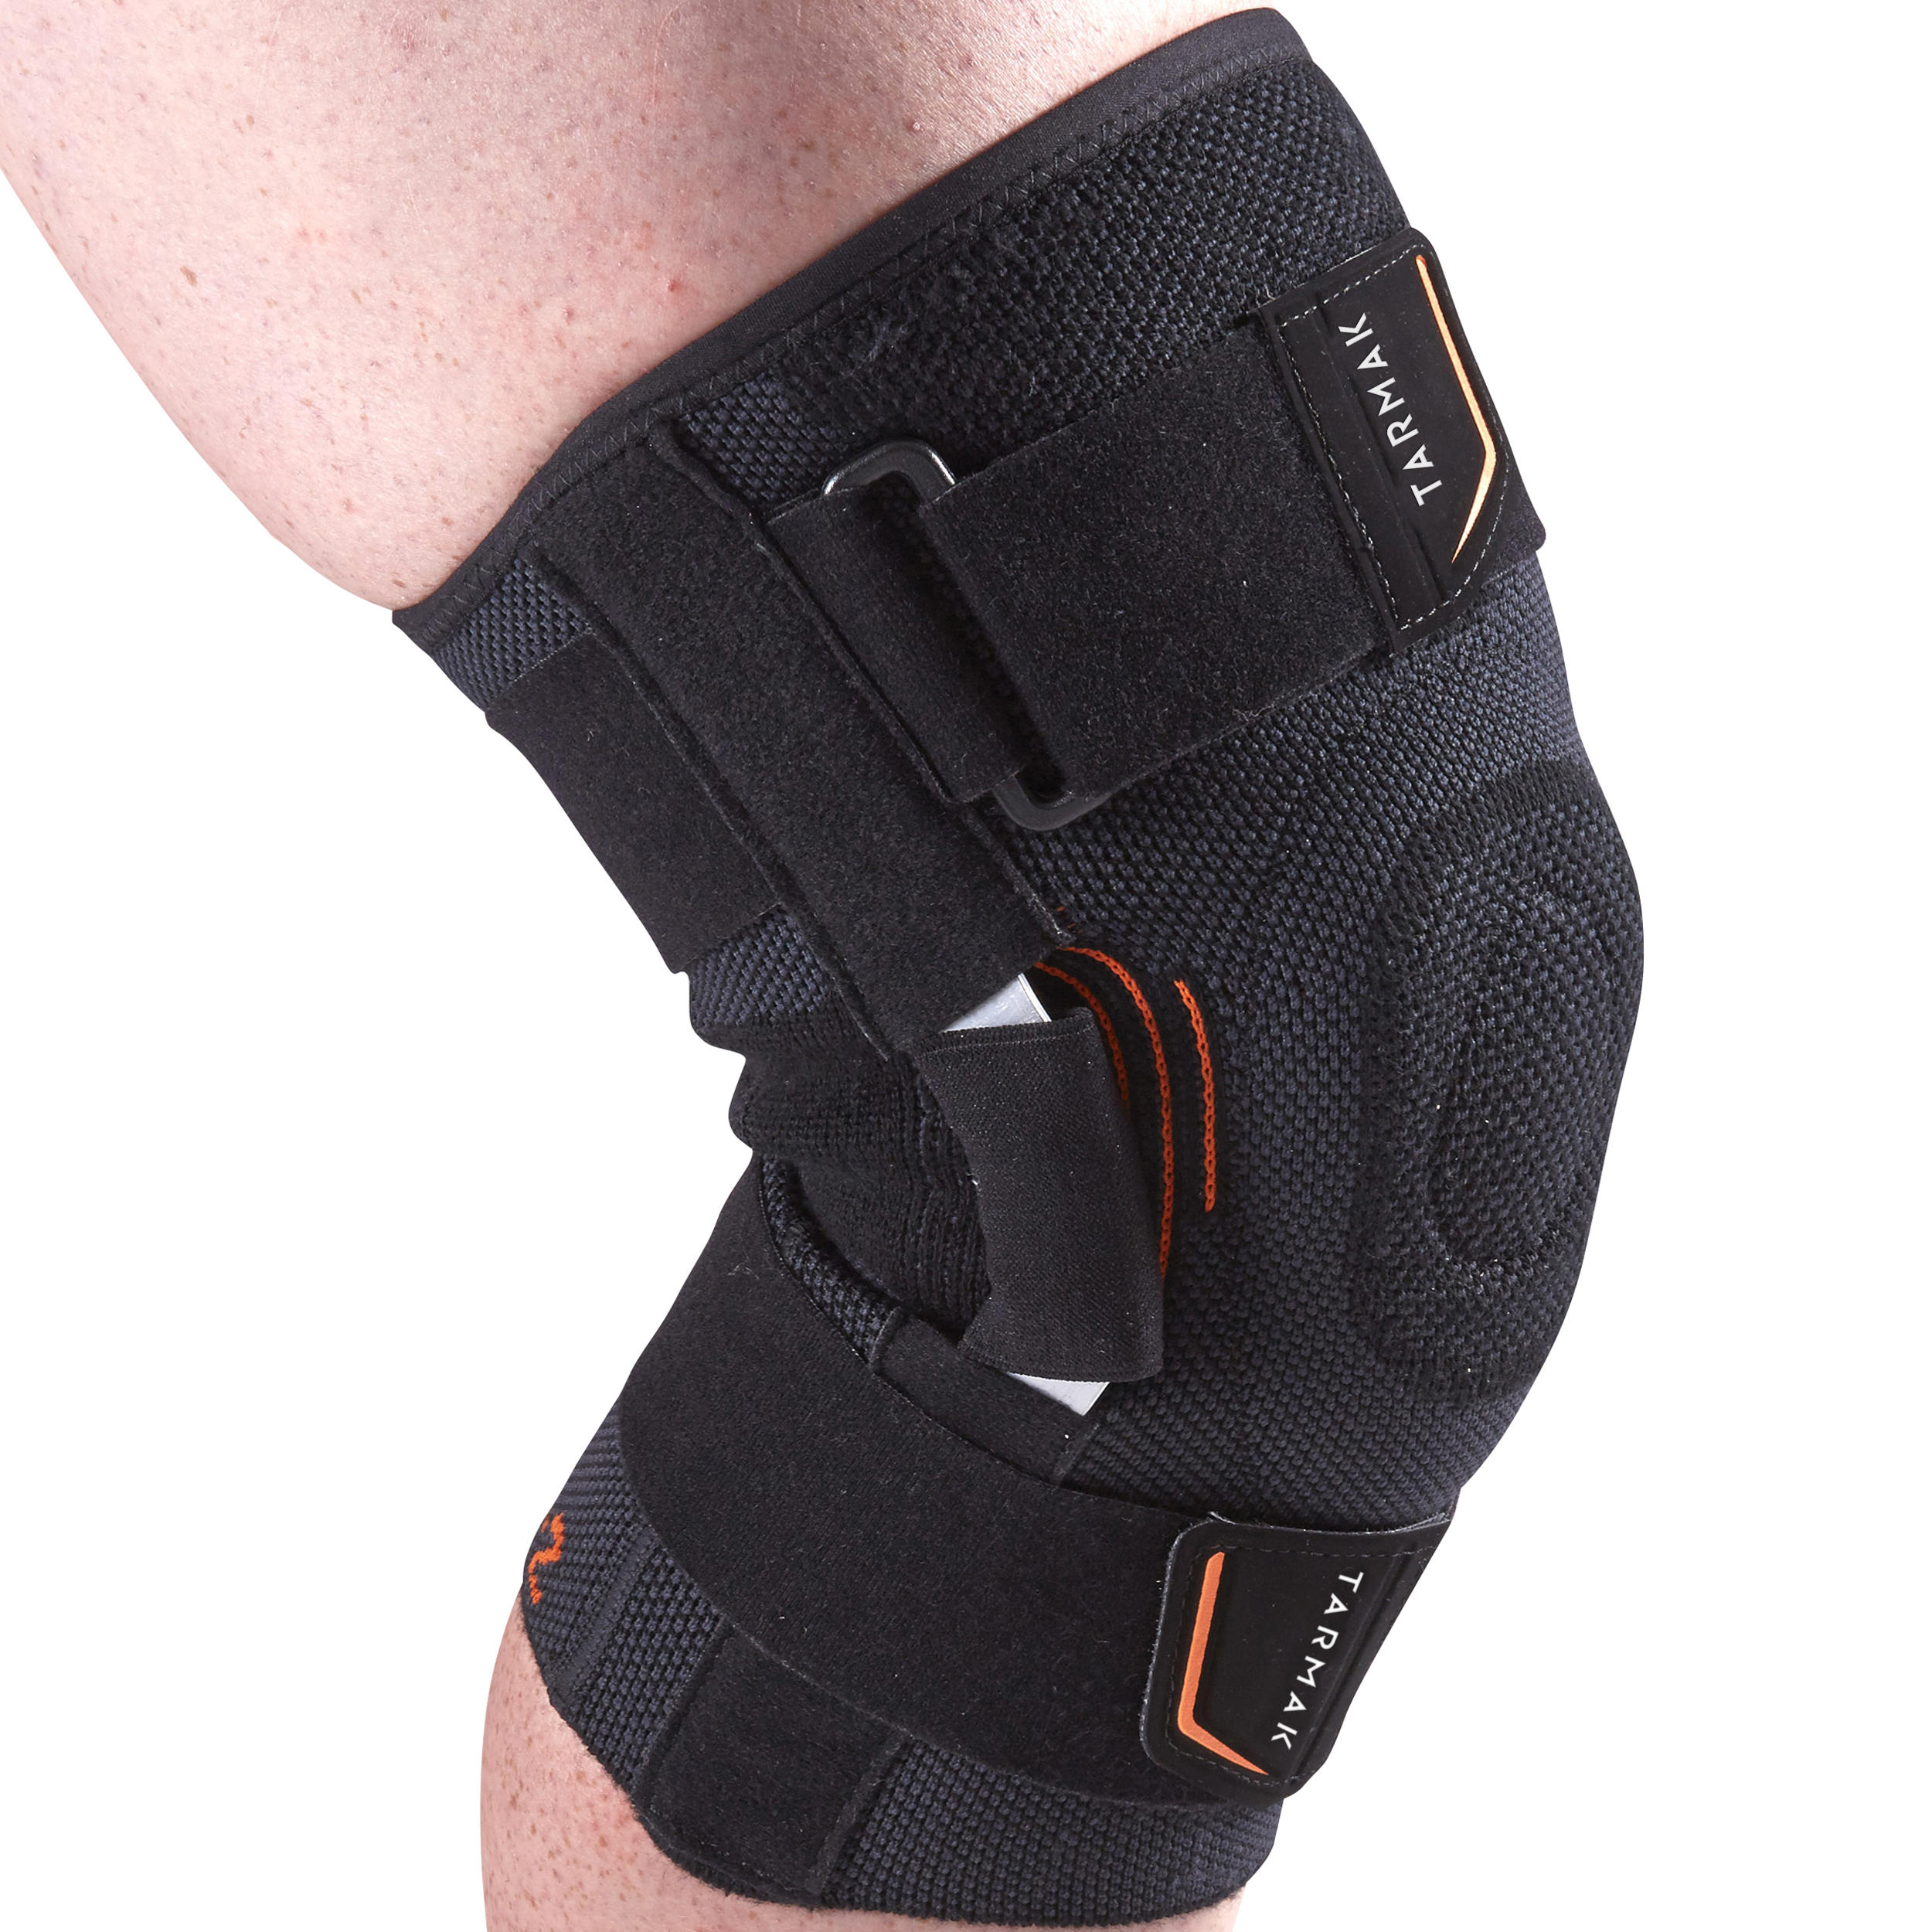 Strong 700 Right/Left Men's/Women's Knee Ligament Support - Black 1/6